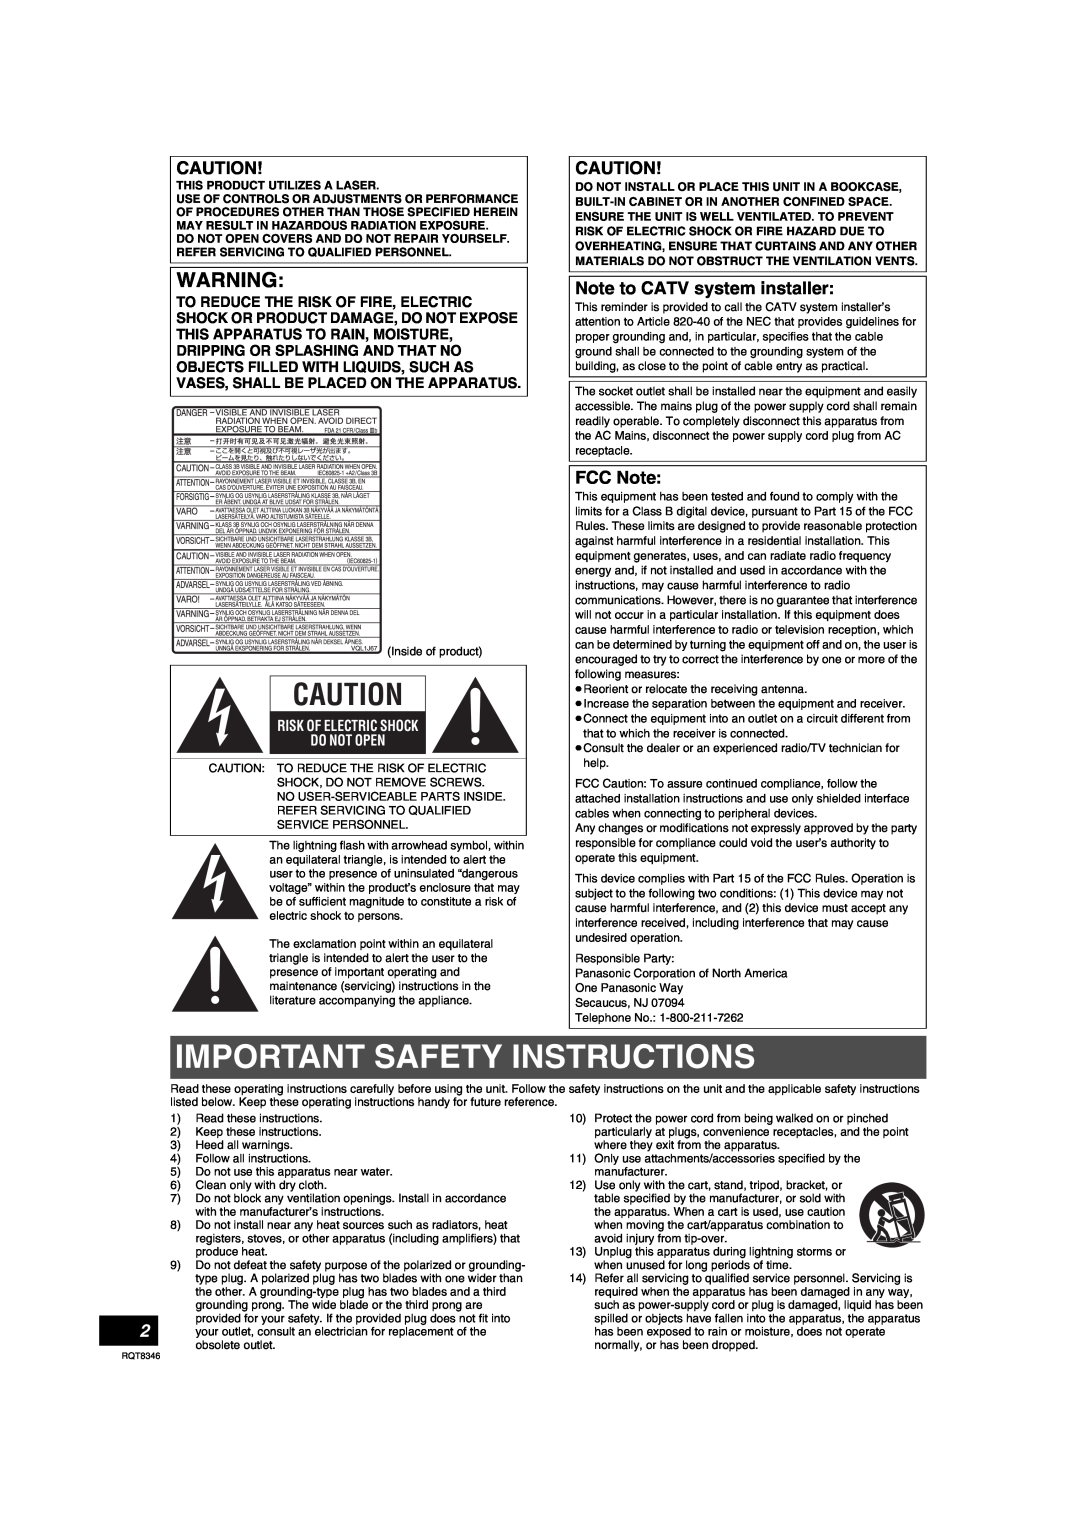 Panasonic DMR-EH75V warranty Note to CATV system installer, FCC Note, Important Safety Instructions 